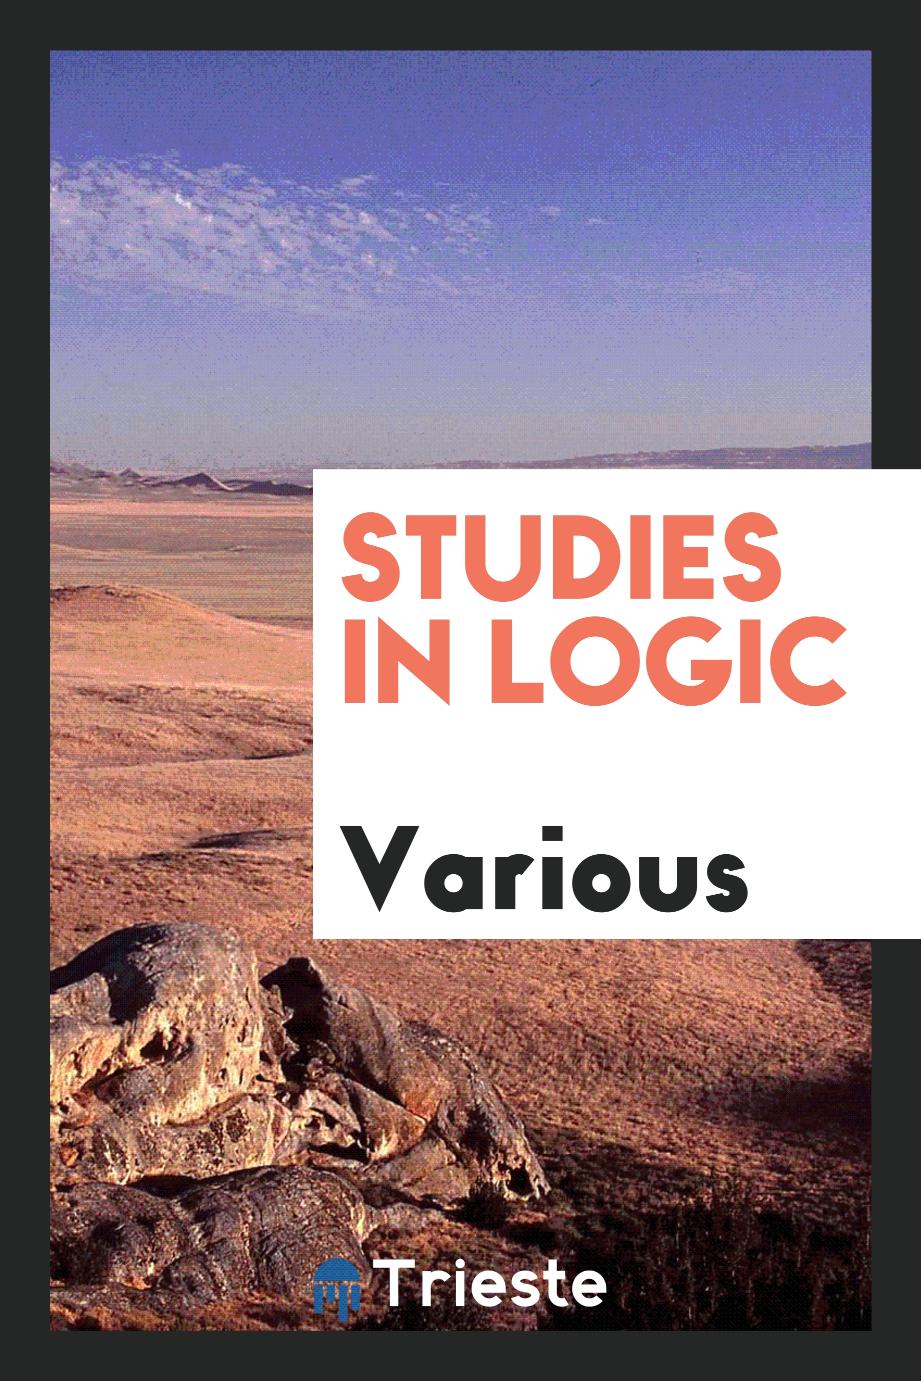 Studies in logic